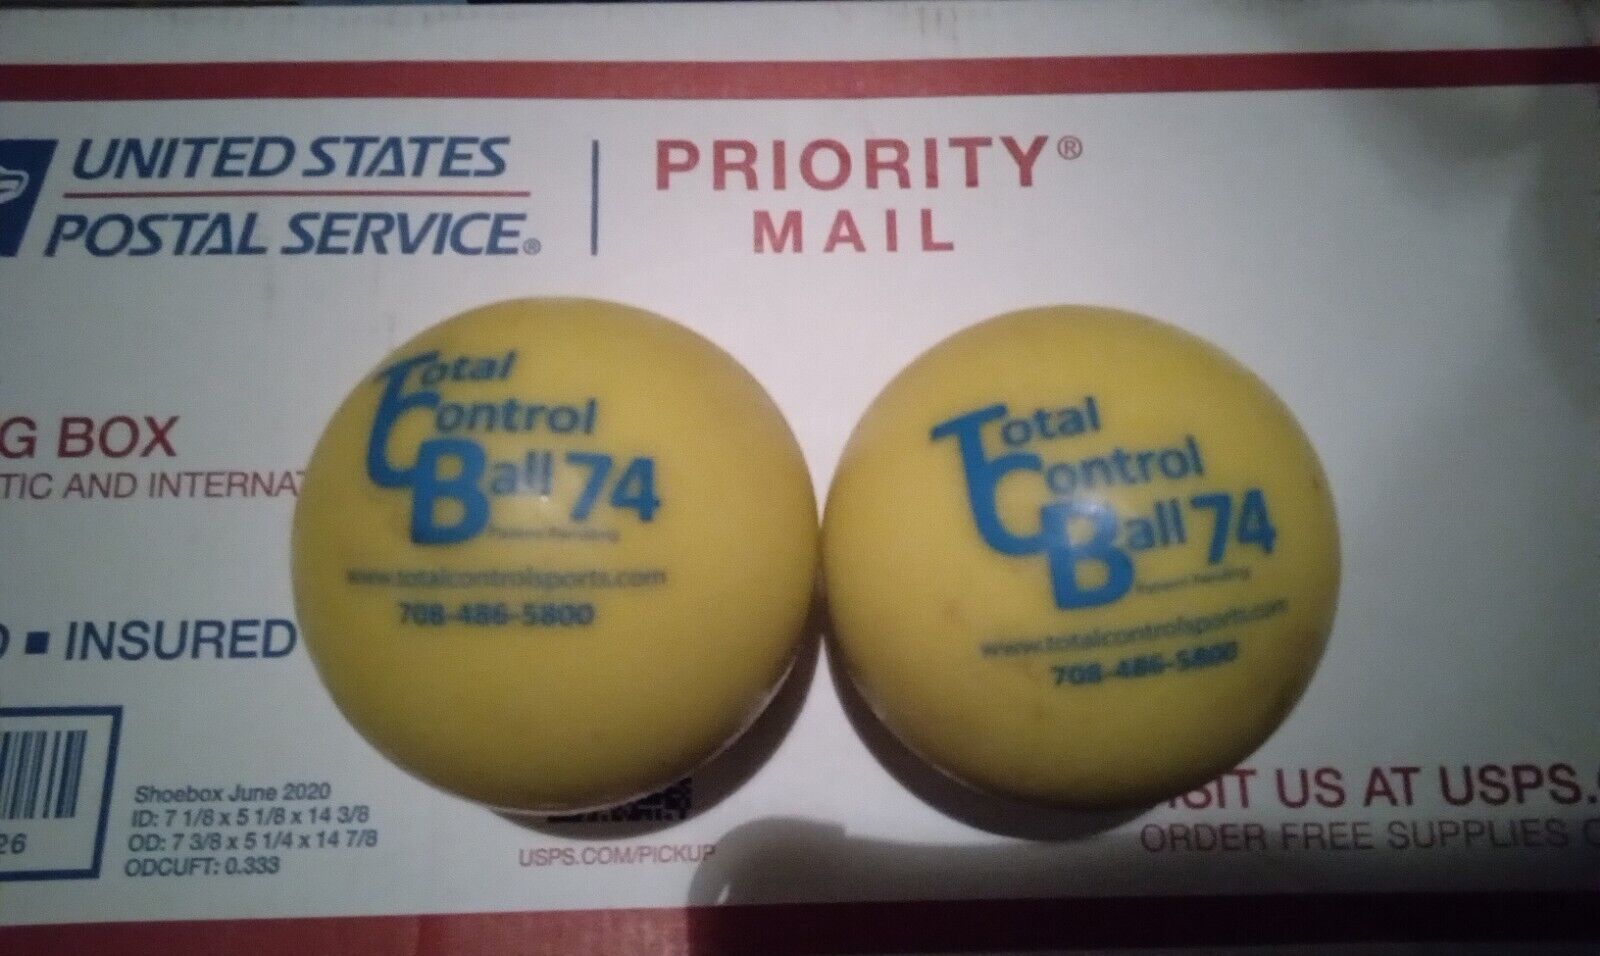 2 - Total Control Ball 74 Pair Baseball Softball Weighted Heavy Balls Yellow